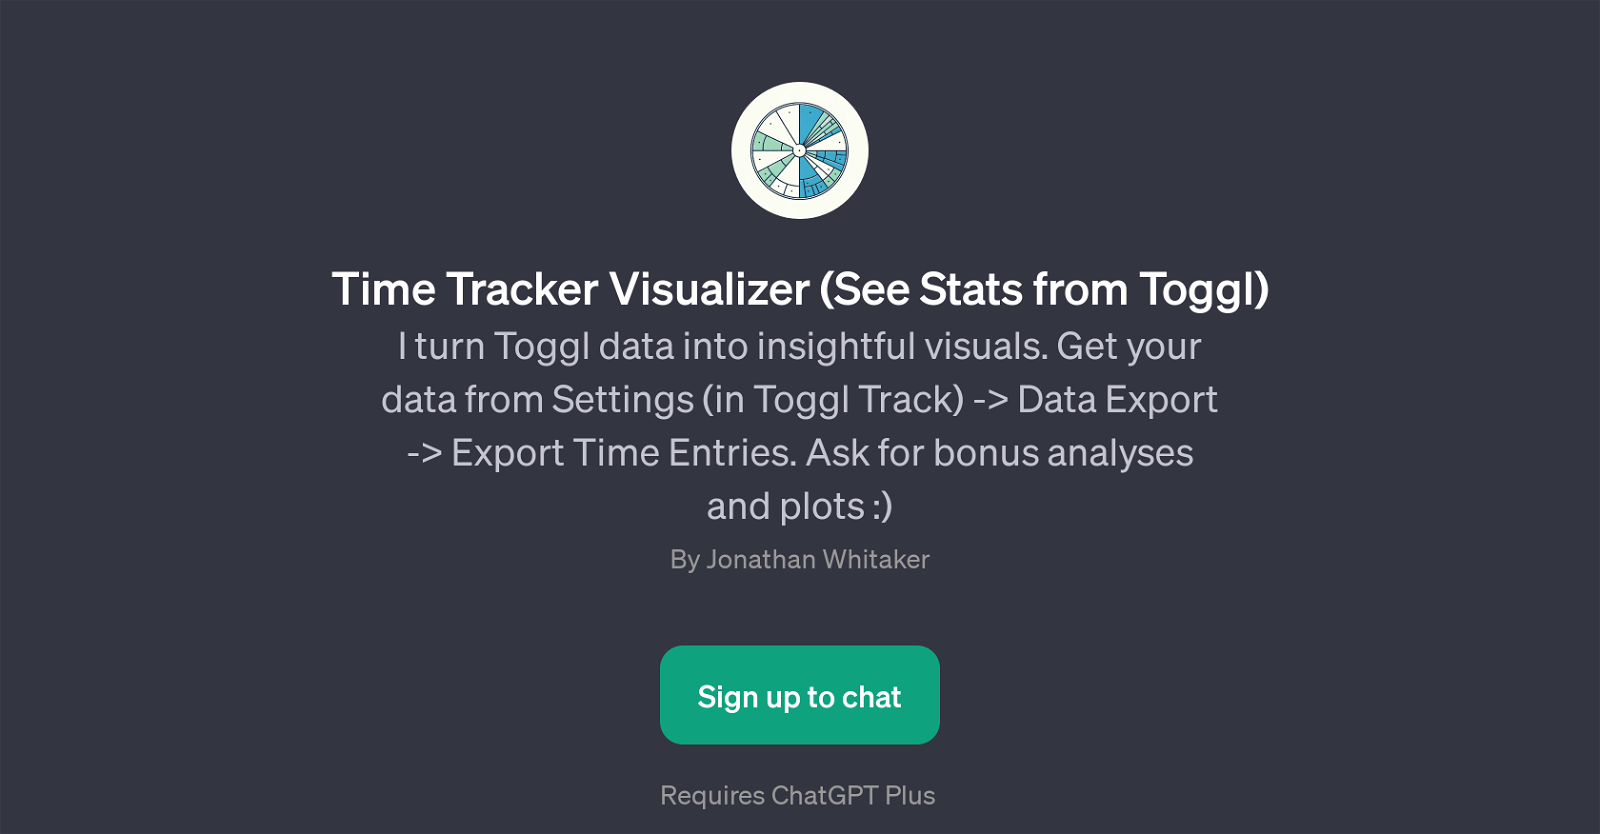 Time Tracker Visualizer website